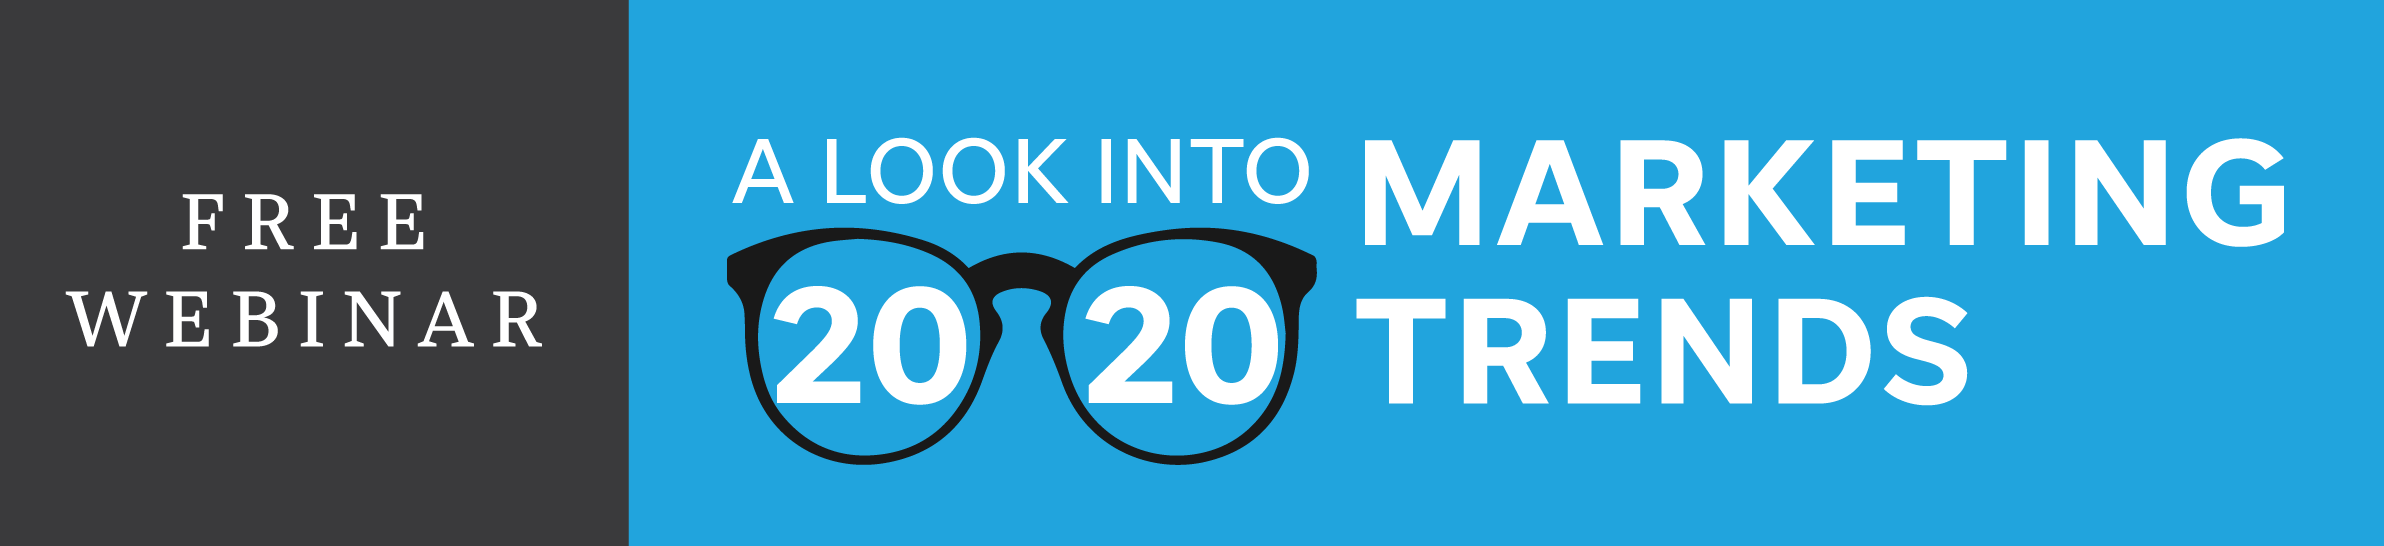 FREE WEBINAR | A look into 2020 marketing trends